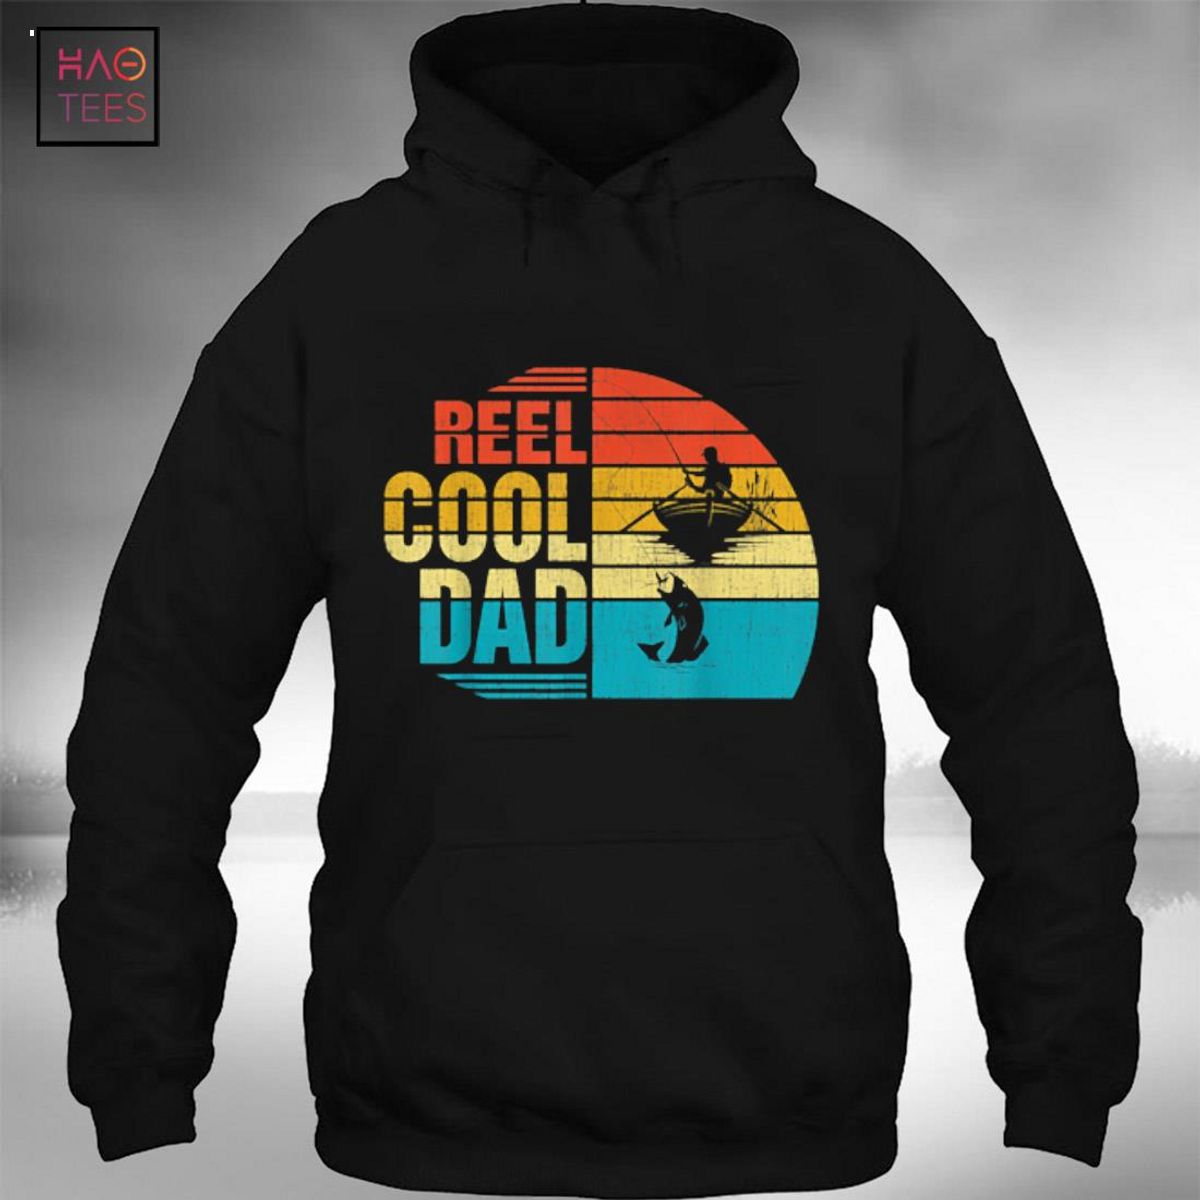 Reel Cool Dzia Fishing Shirt Best Gift For Grandpa Mens Father'S Day Granddad T-Shirt Tshirt Tee For Him.